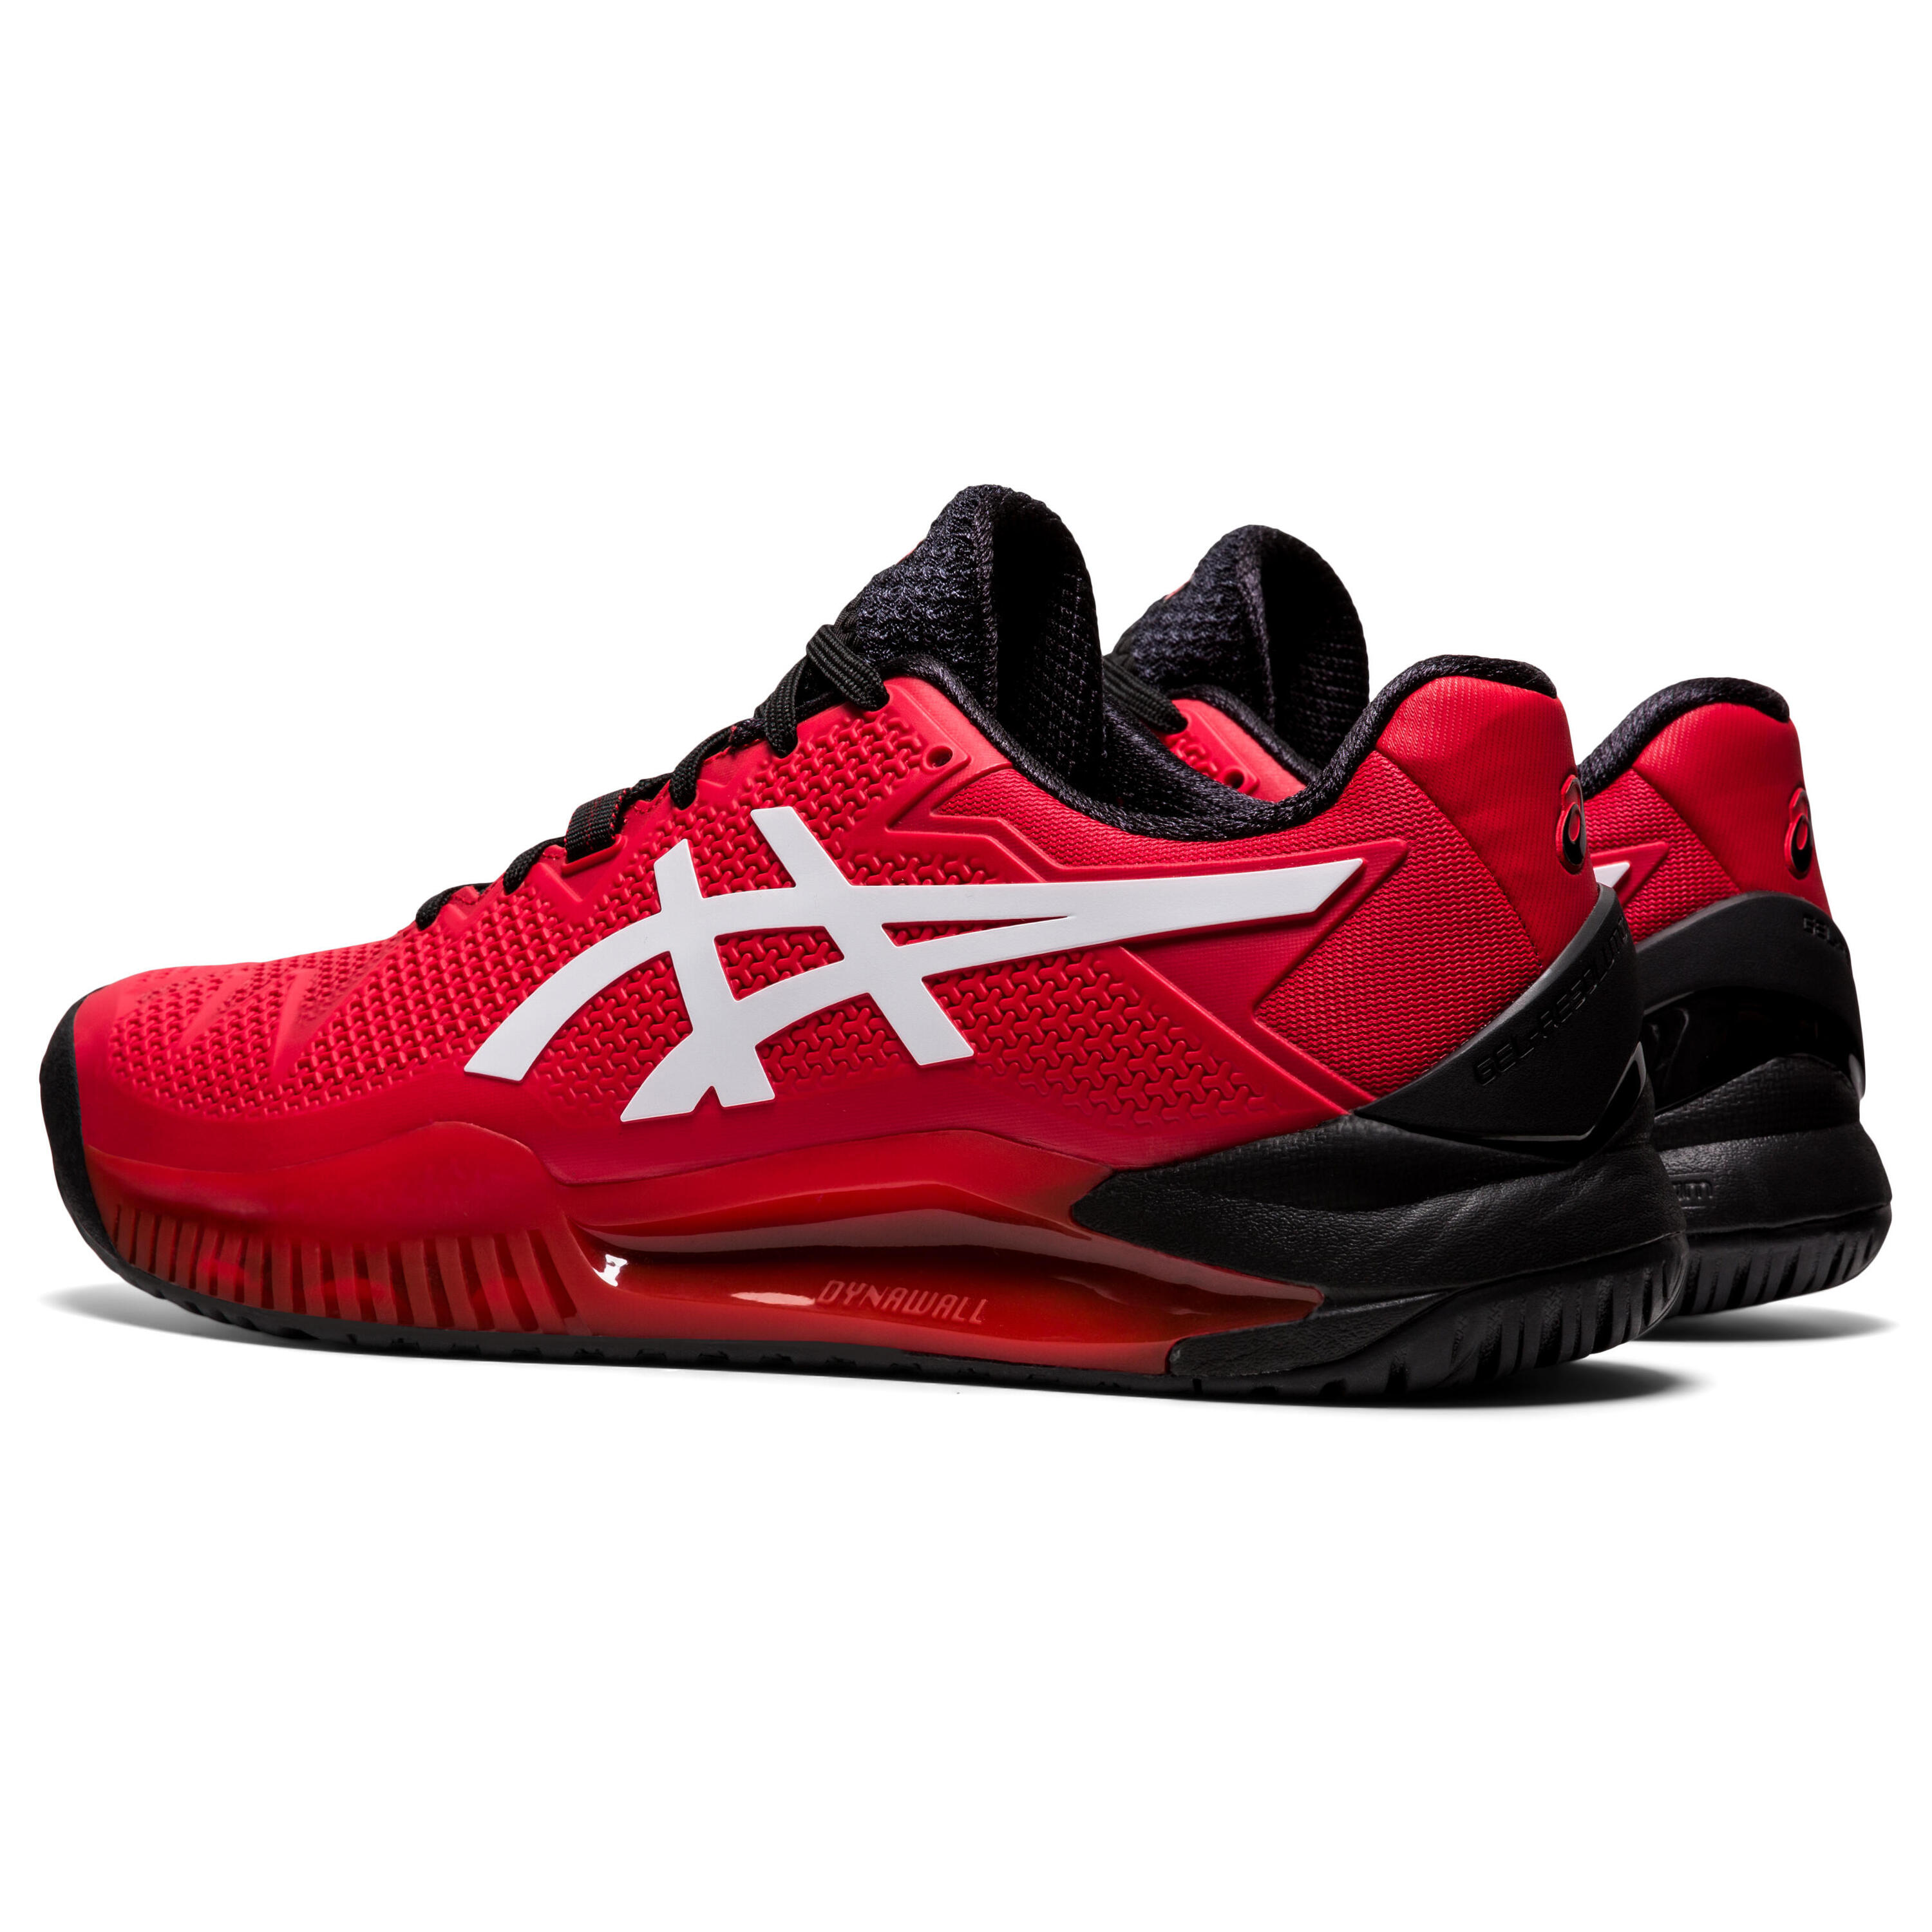 Men's Multi-Court Tennis Shoes Gel Resolution 8 - Red 5/7